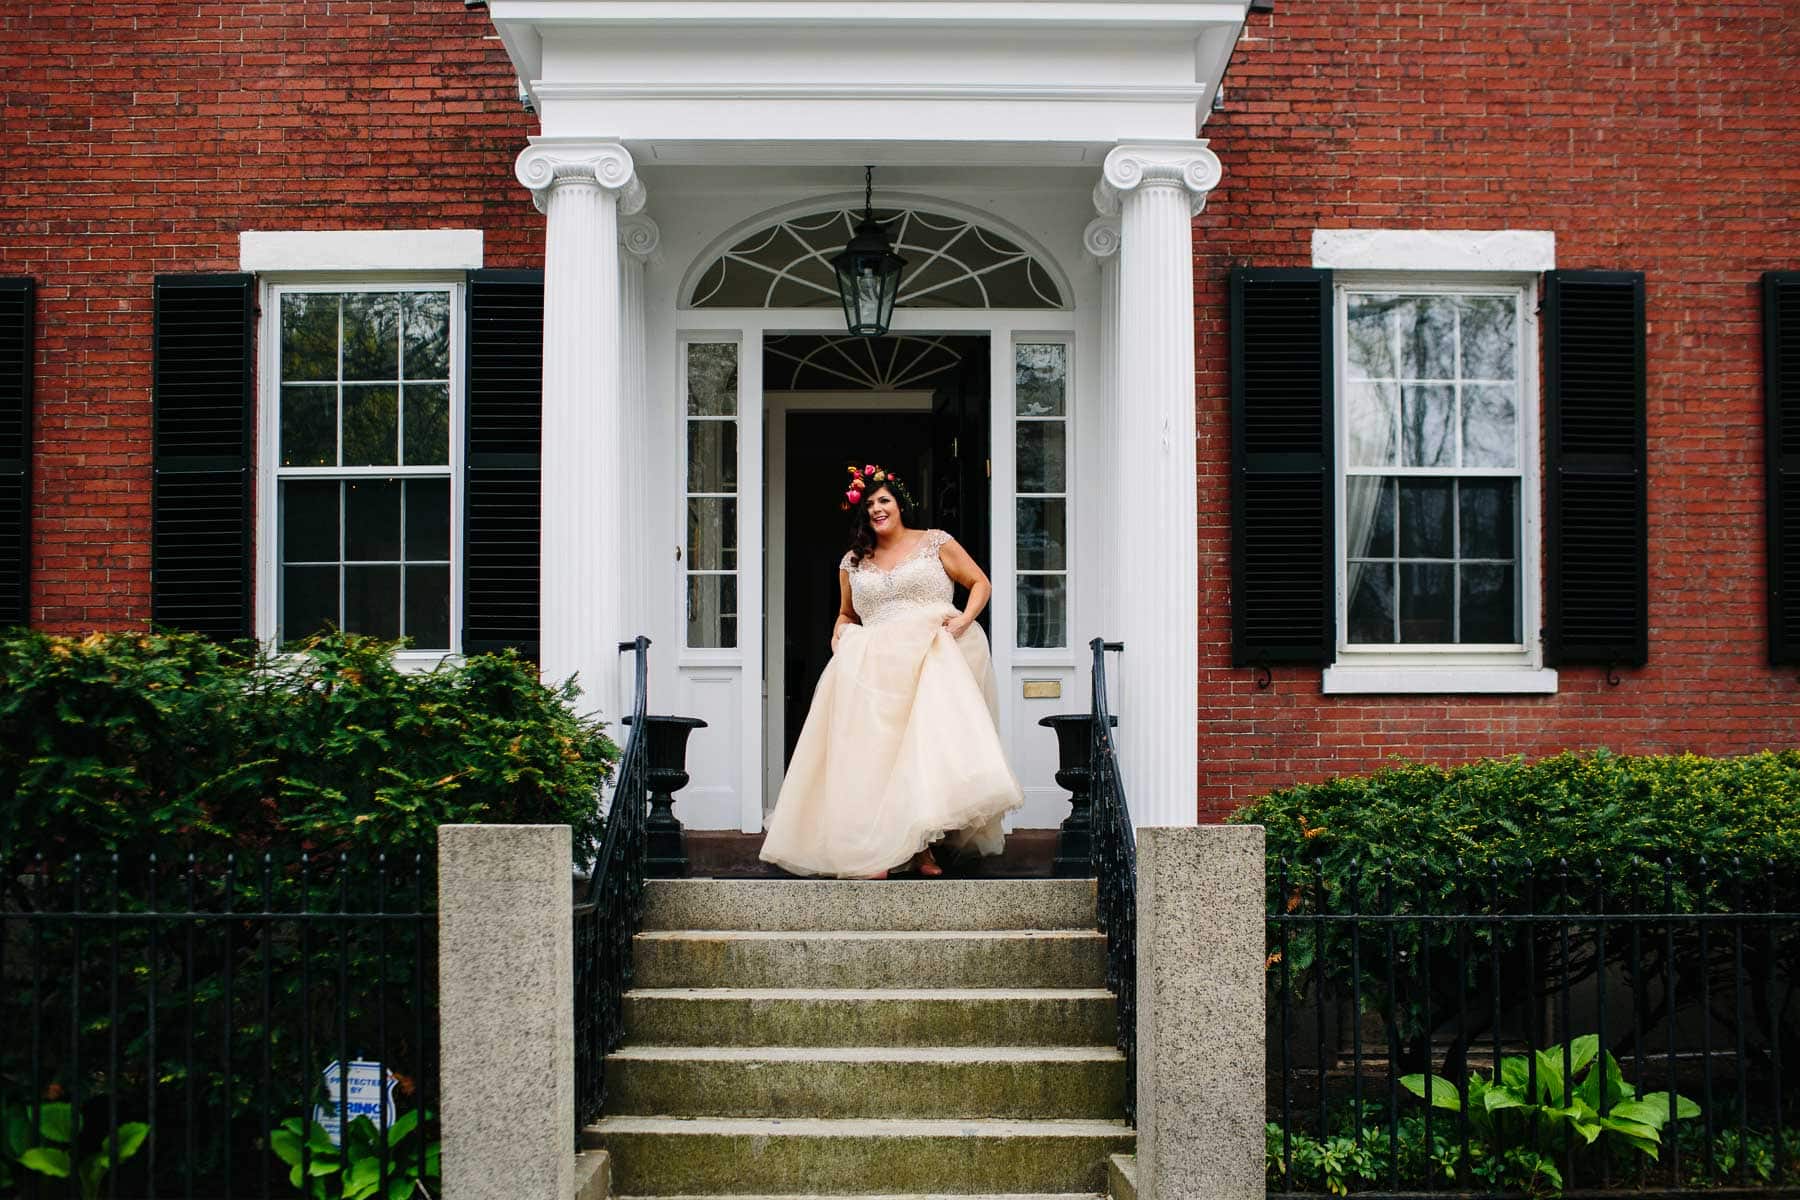 Christie and Josh's wedding at the Barn at Crane Estate in Ipswich, MA | Kelly Benvenuto Photography | Boston Wedding Photographer